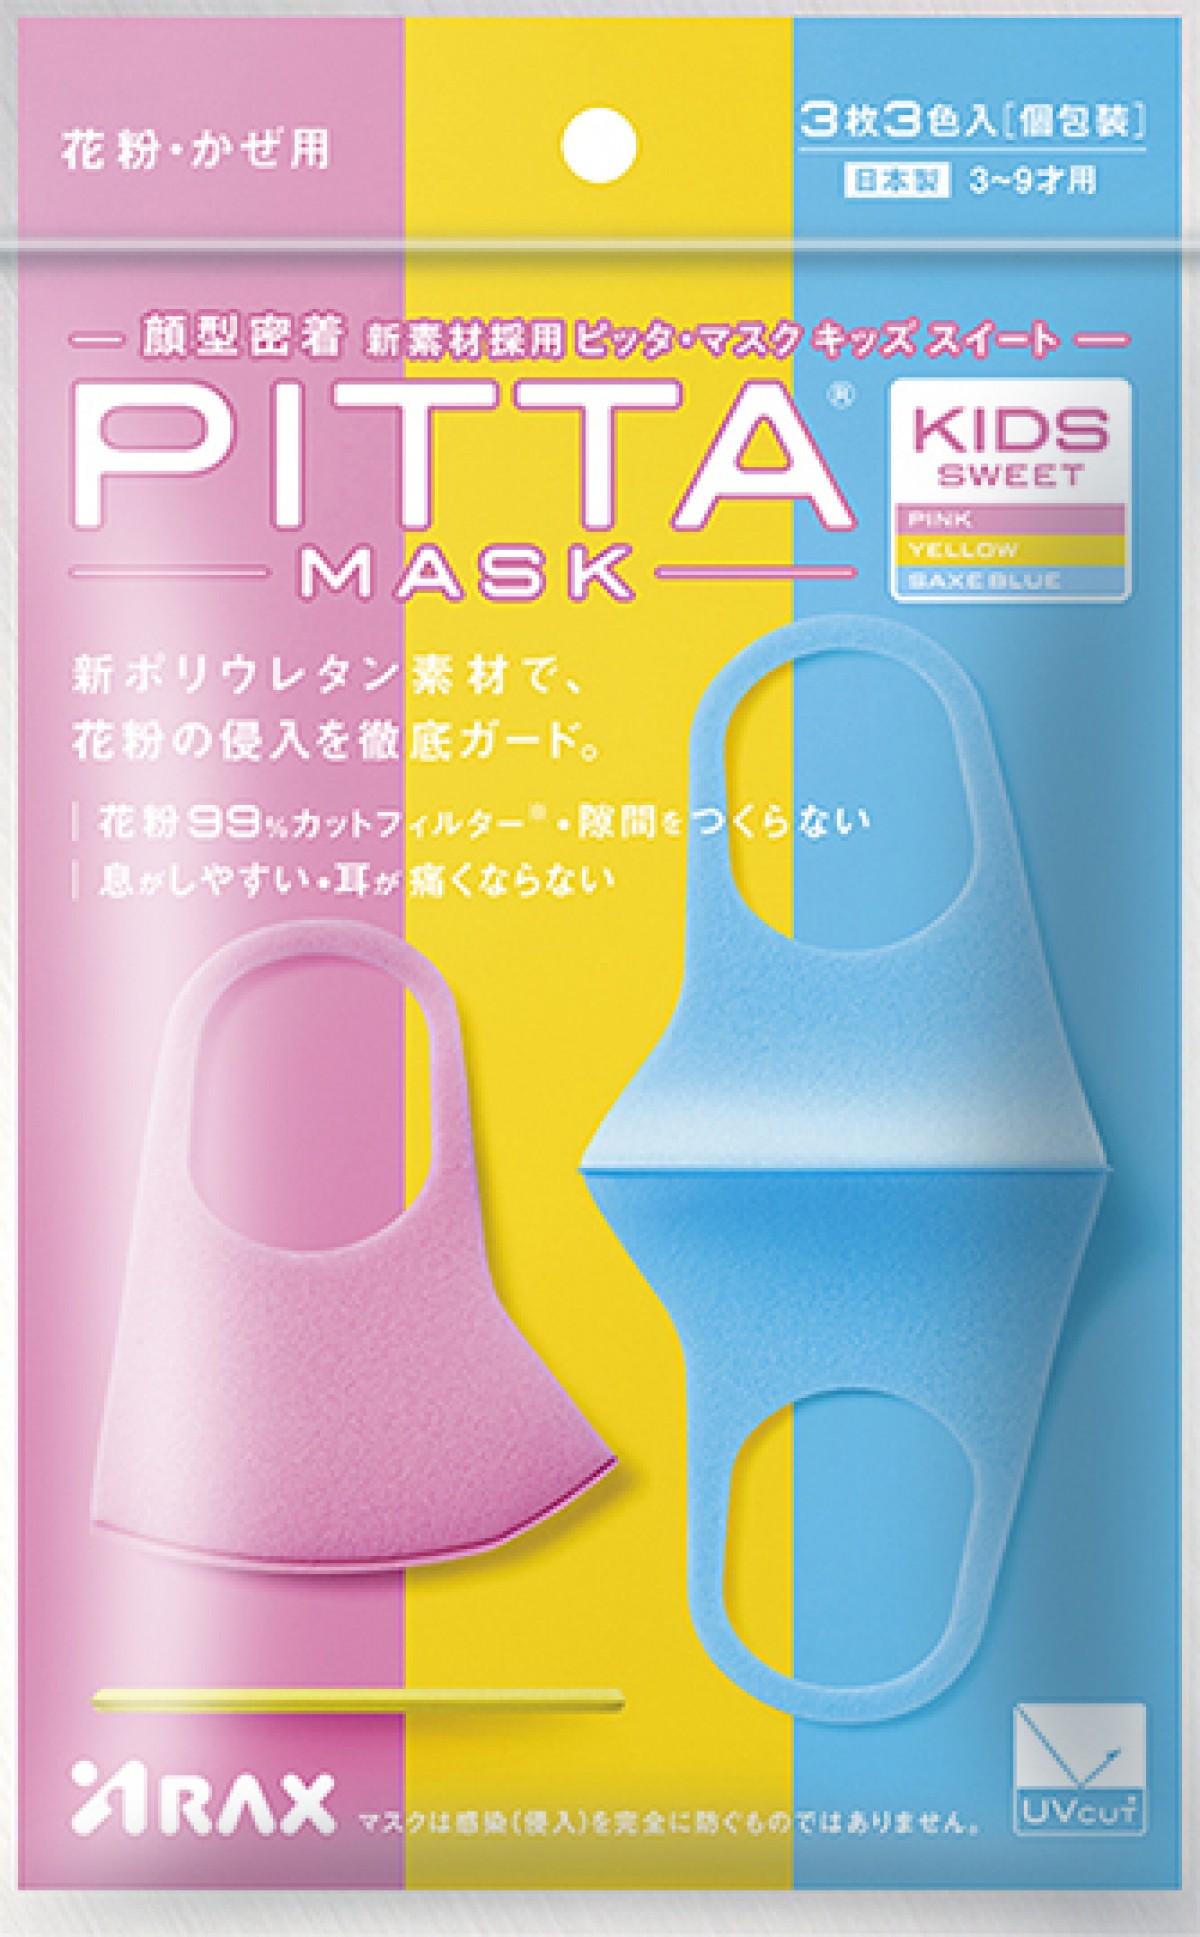 TRY！ PITTA 2020 －TOKYO Pop up Store－